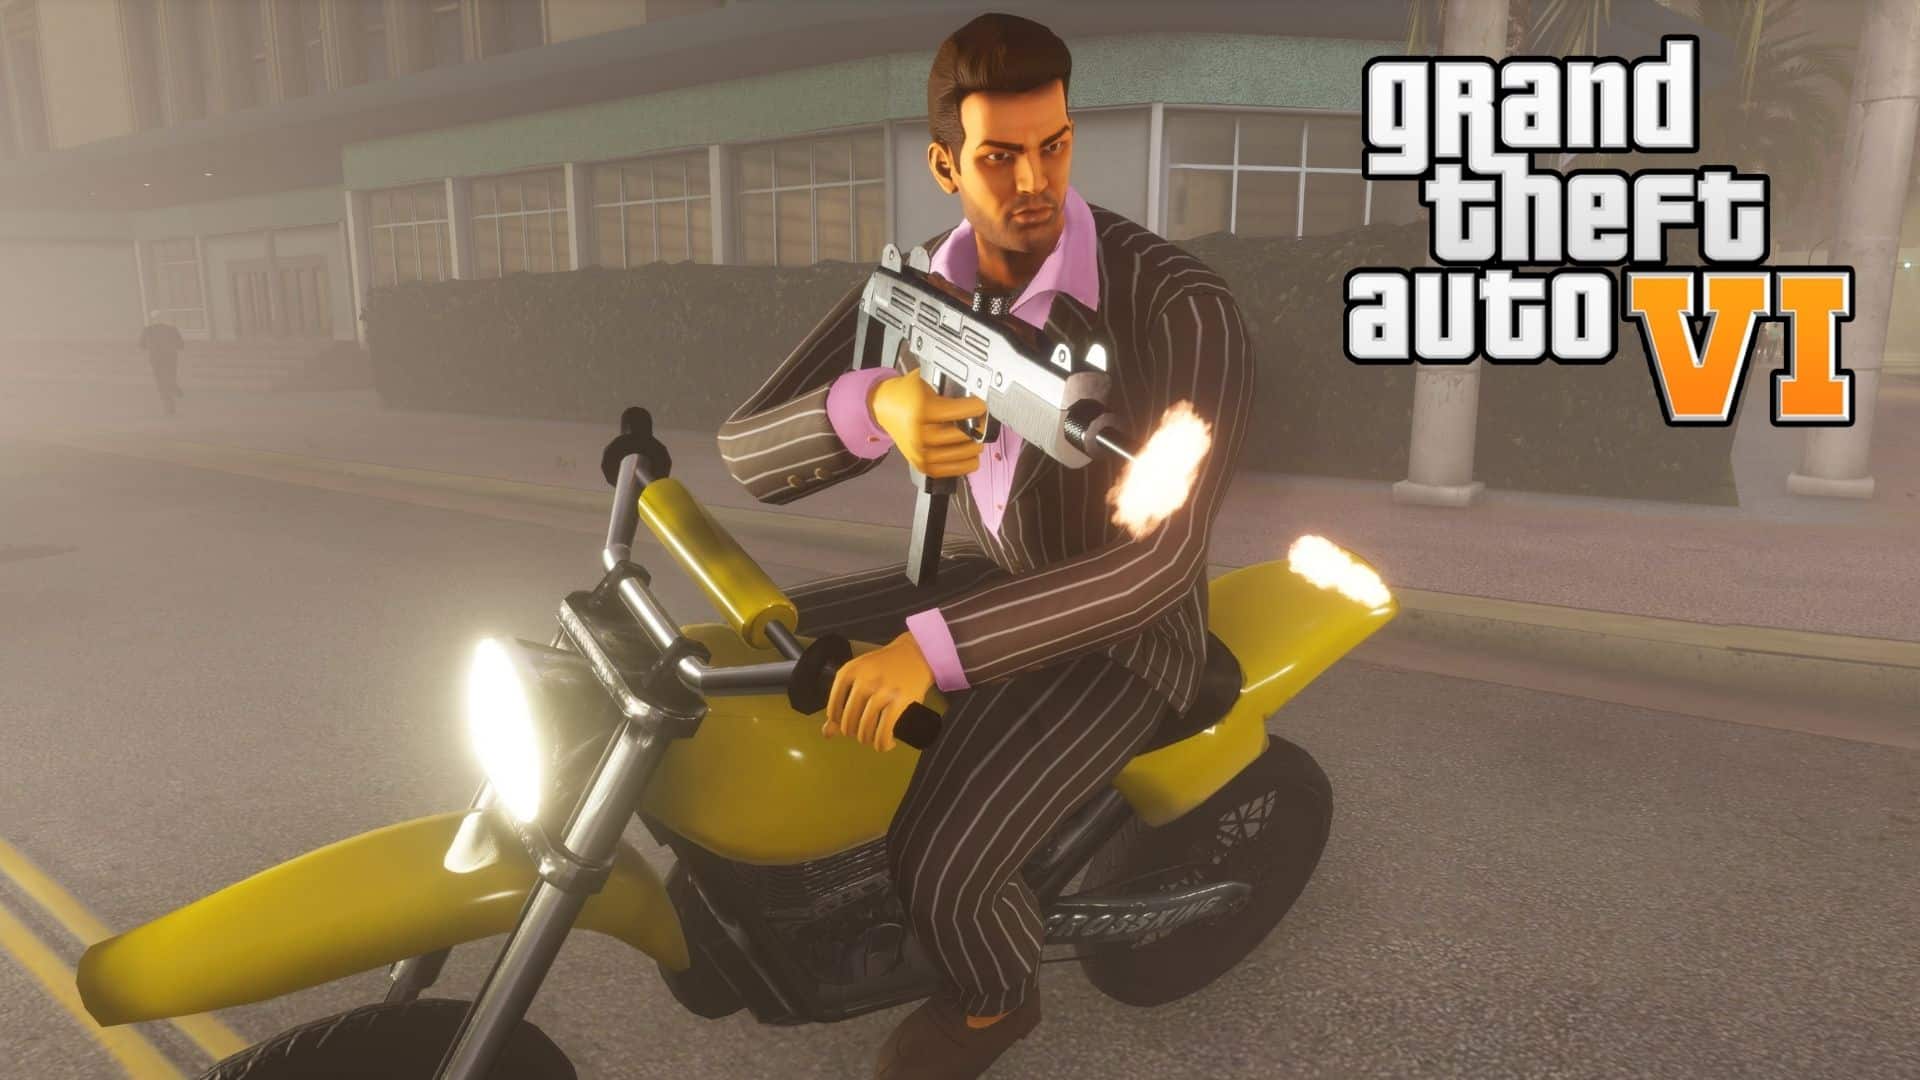 GTA 6 trailer may have just leaked ahead of rumored October reveal - Dexerto